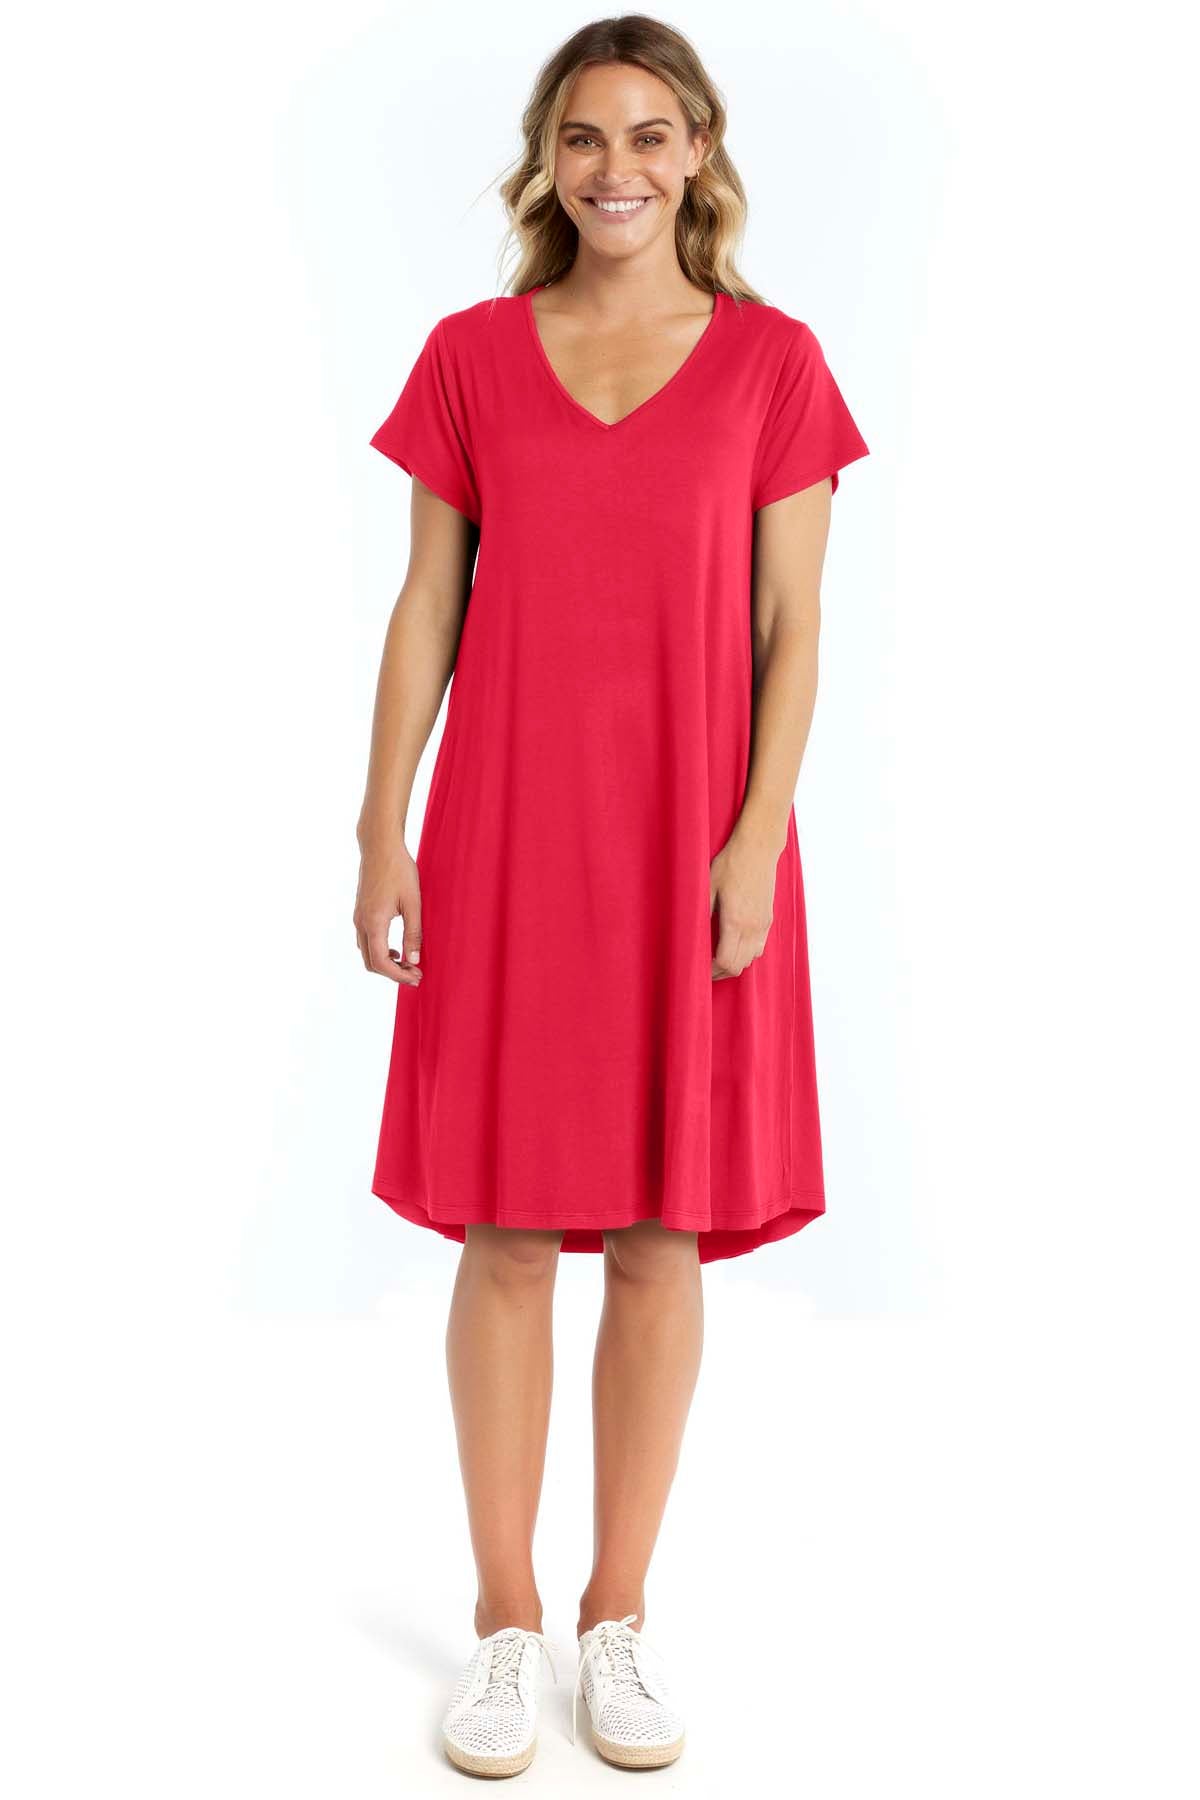 Betty Basics Brooke Mini Dress in Rose Red - Hey Sara